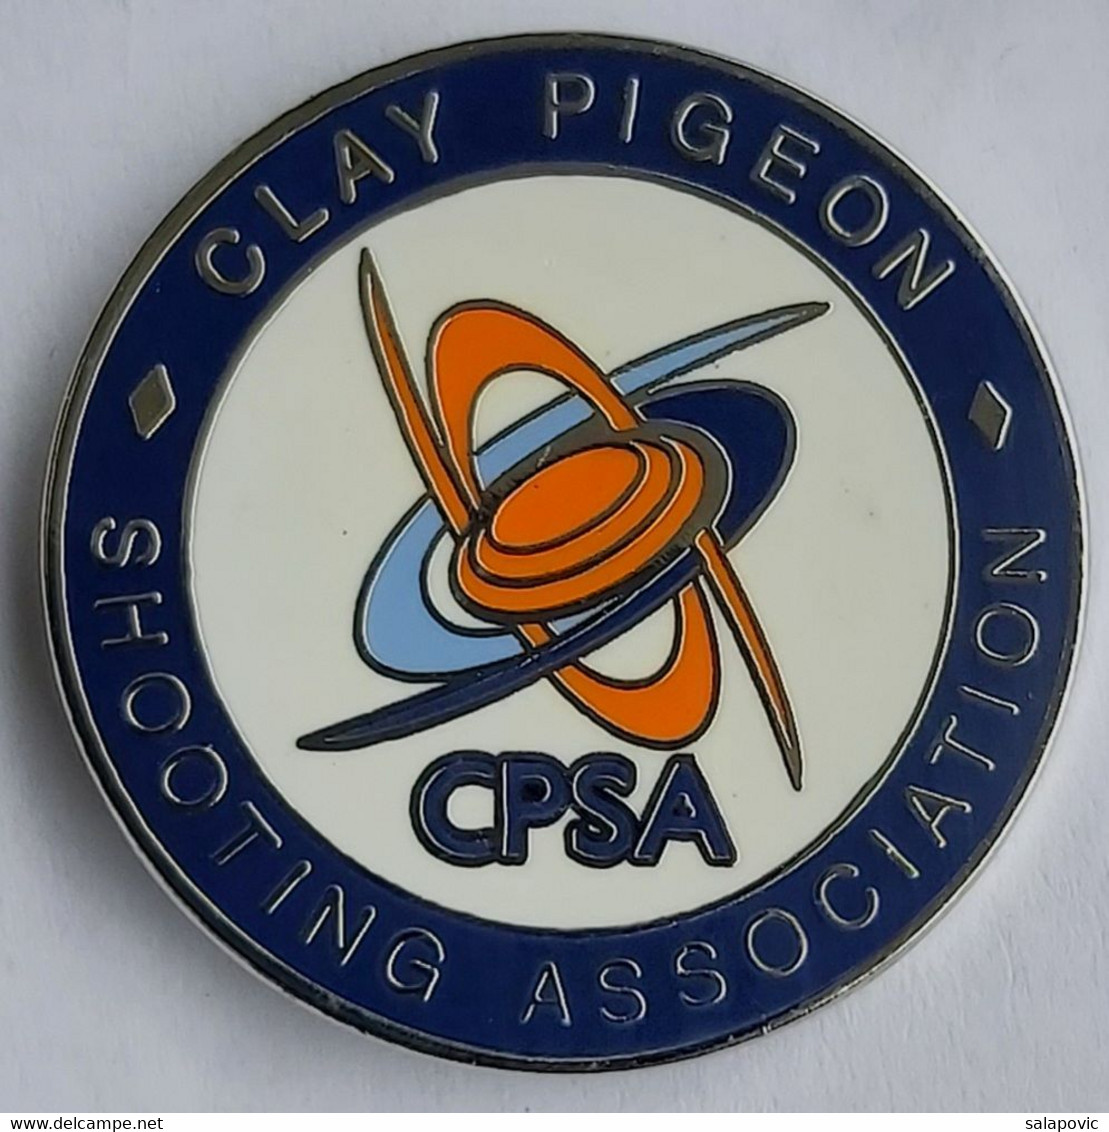 Clay Pigeon Shooting Association (CPSA) England PINS A5/4 - Tir à L'Arc